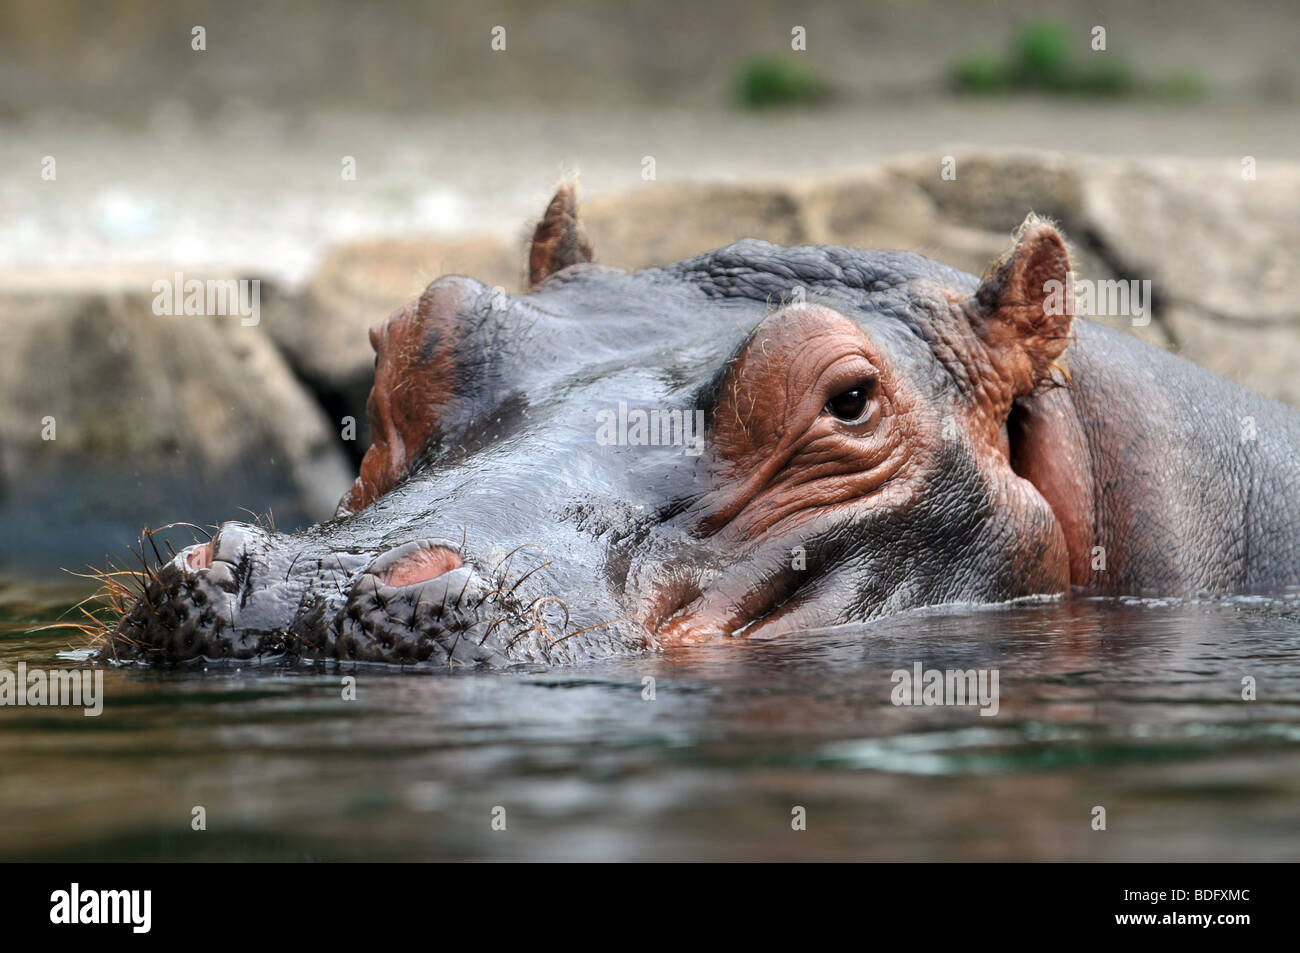 Head of hippopotamus partially submerged in water Stock Photo